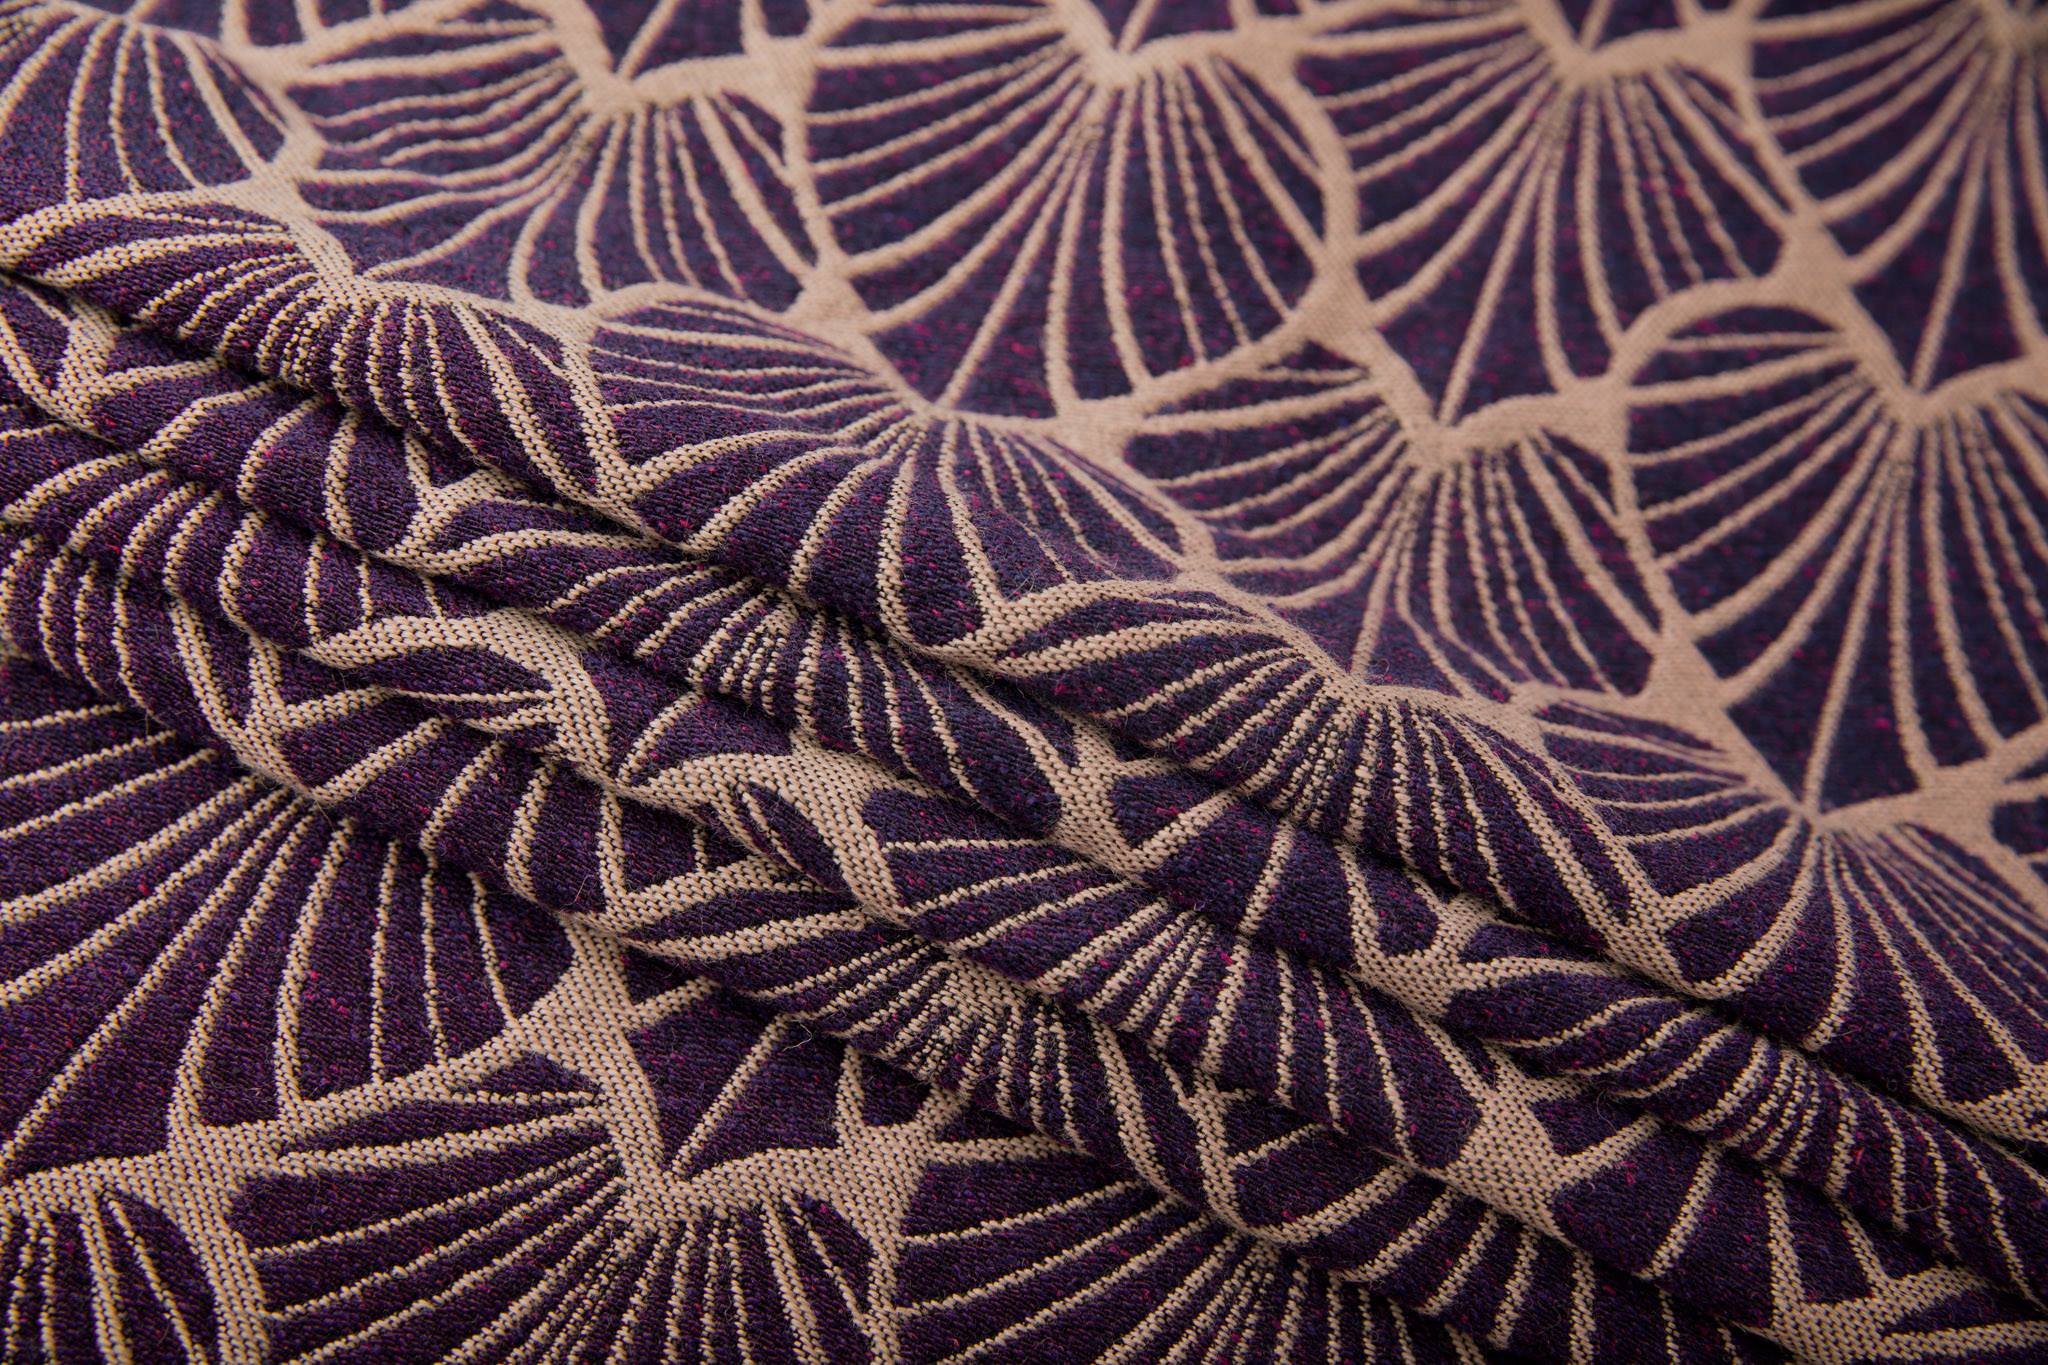 Linuschka Ipomee Pastel (japanese silk, merino, alpaka) Image